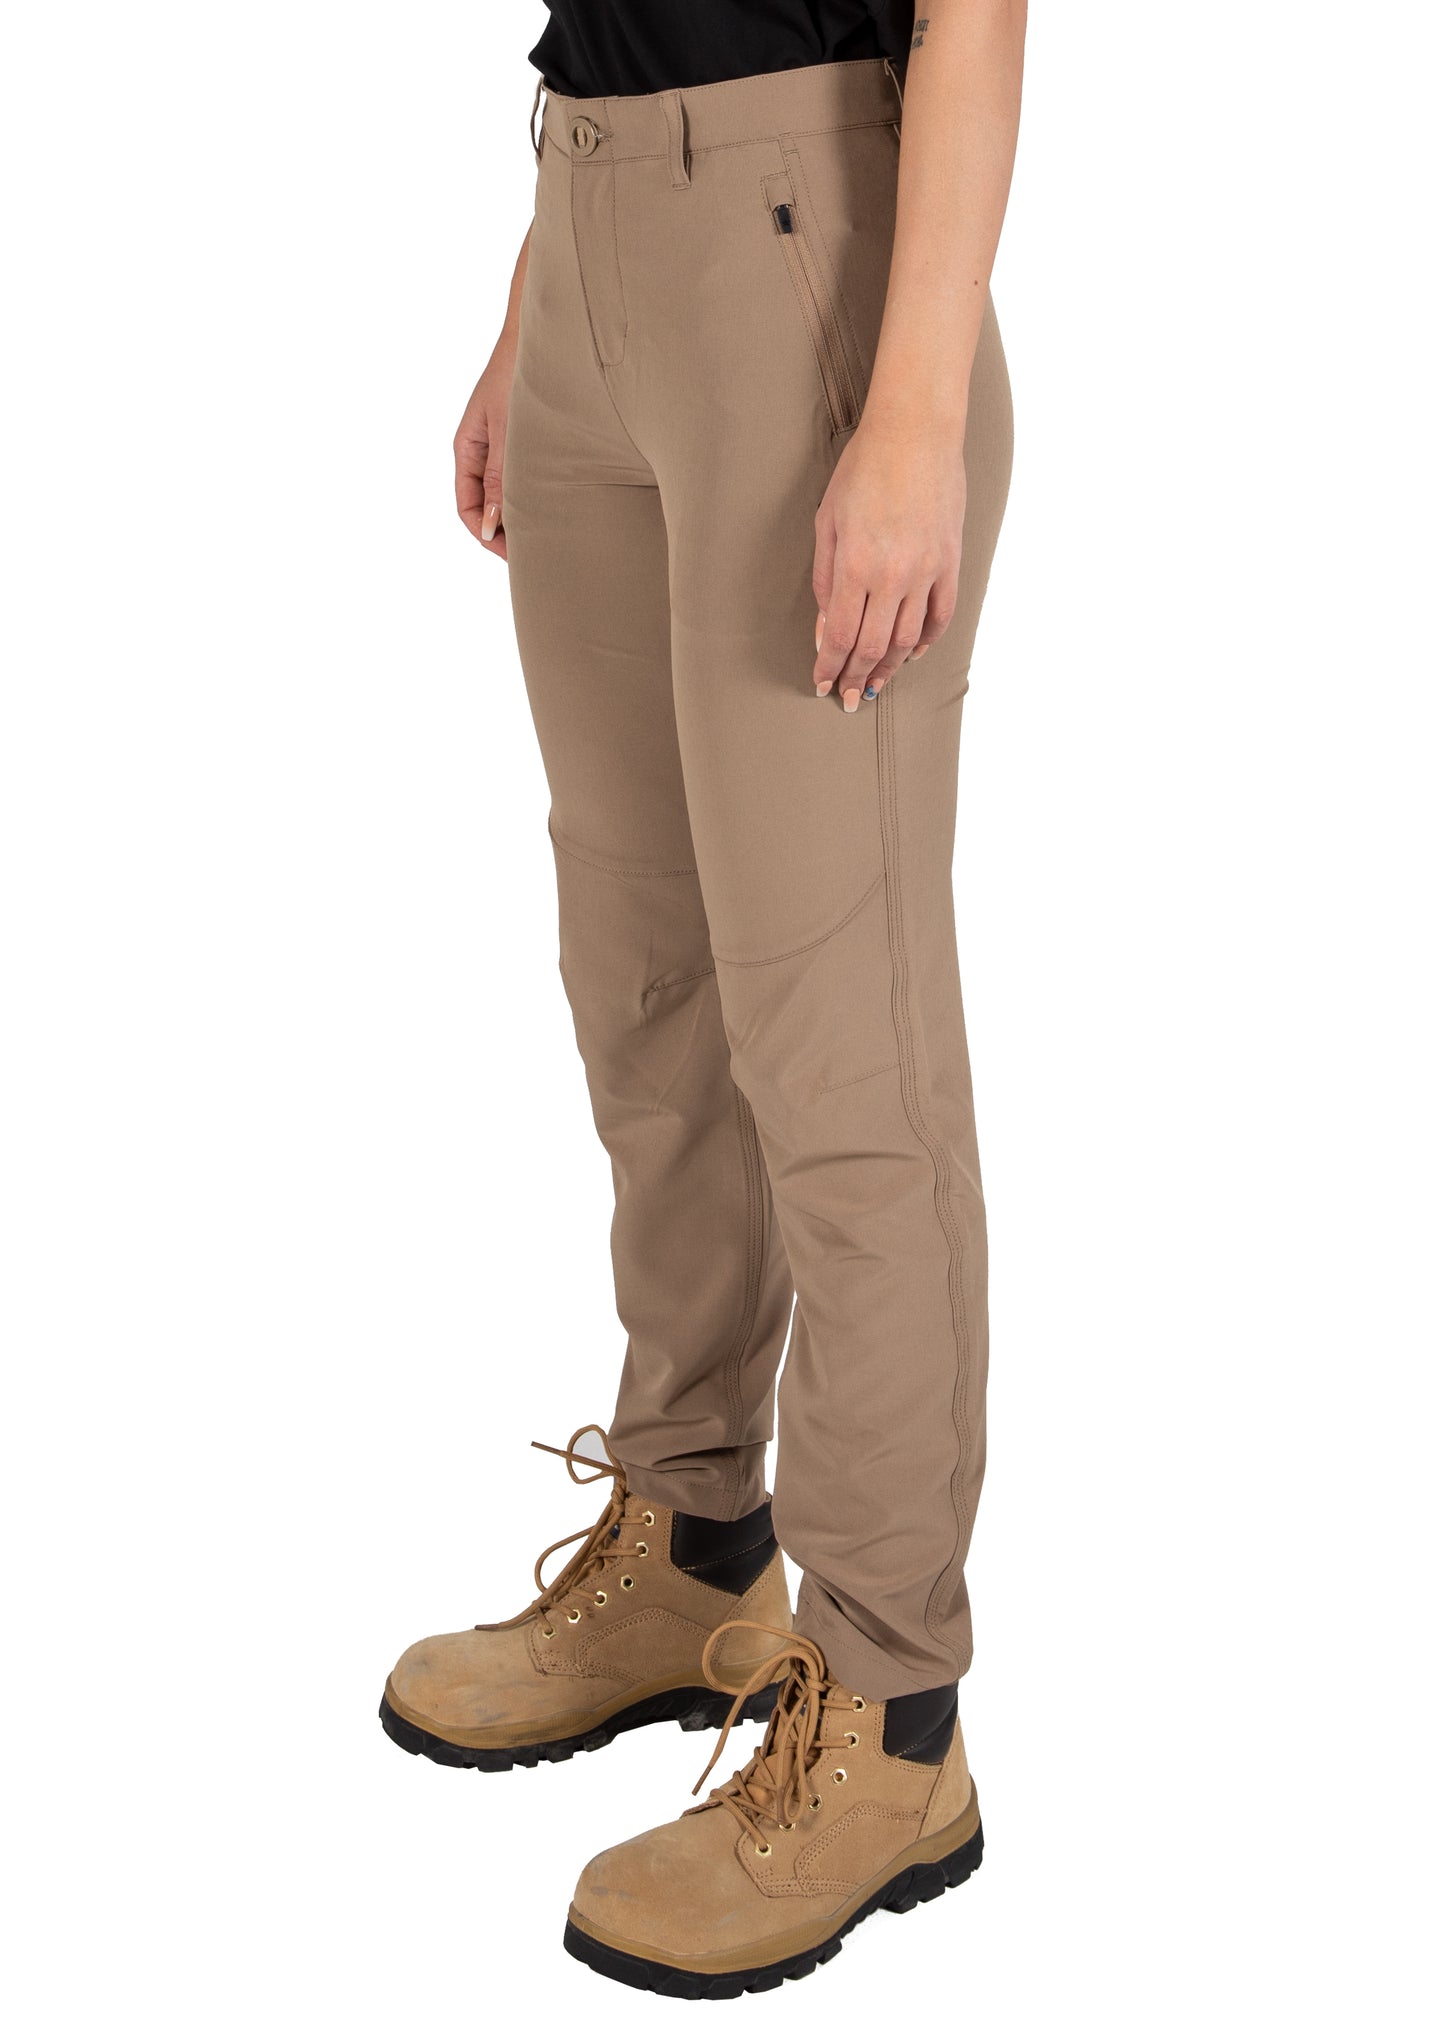 Unit Ladies Workwear Pant - Lightweight - Flexlite